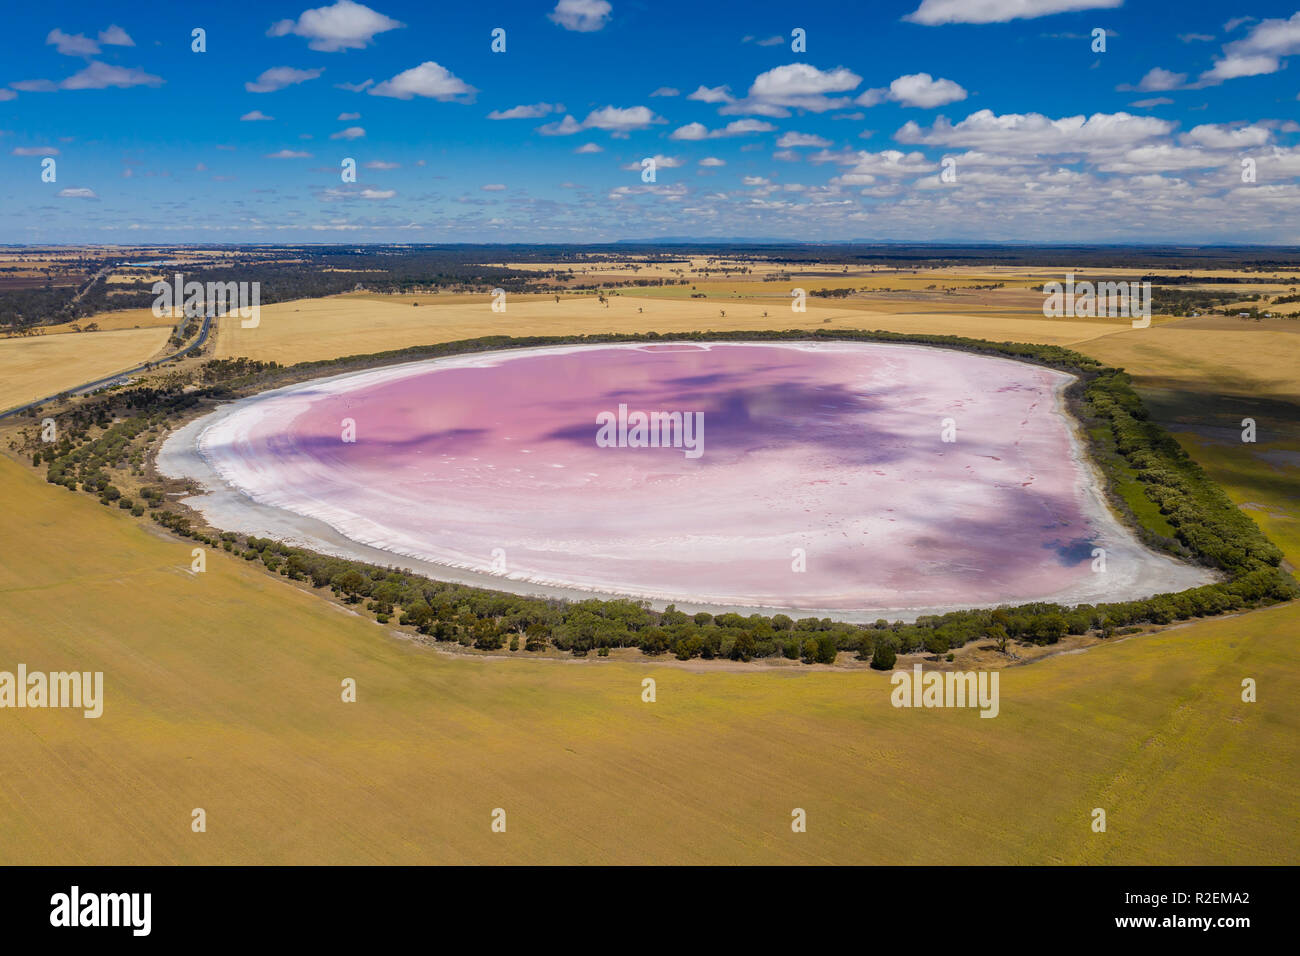 Luftbild von Rosa See in Australien Stockfoto